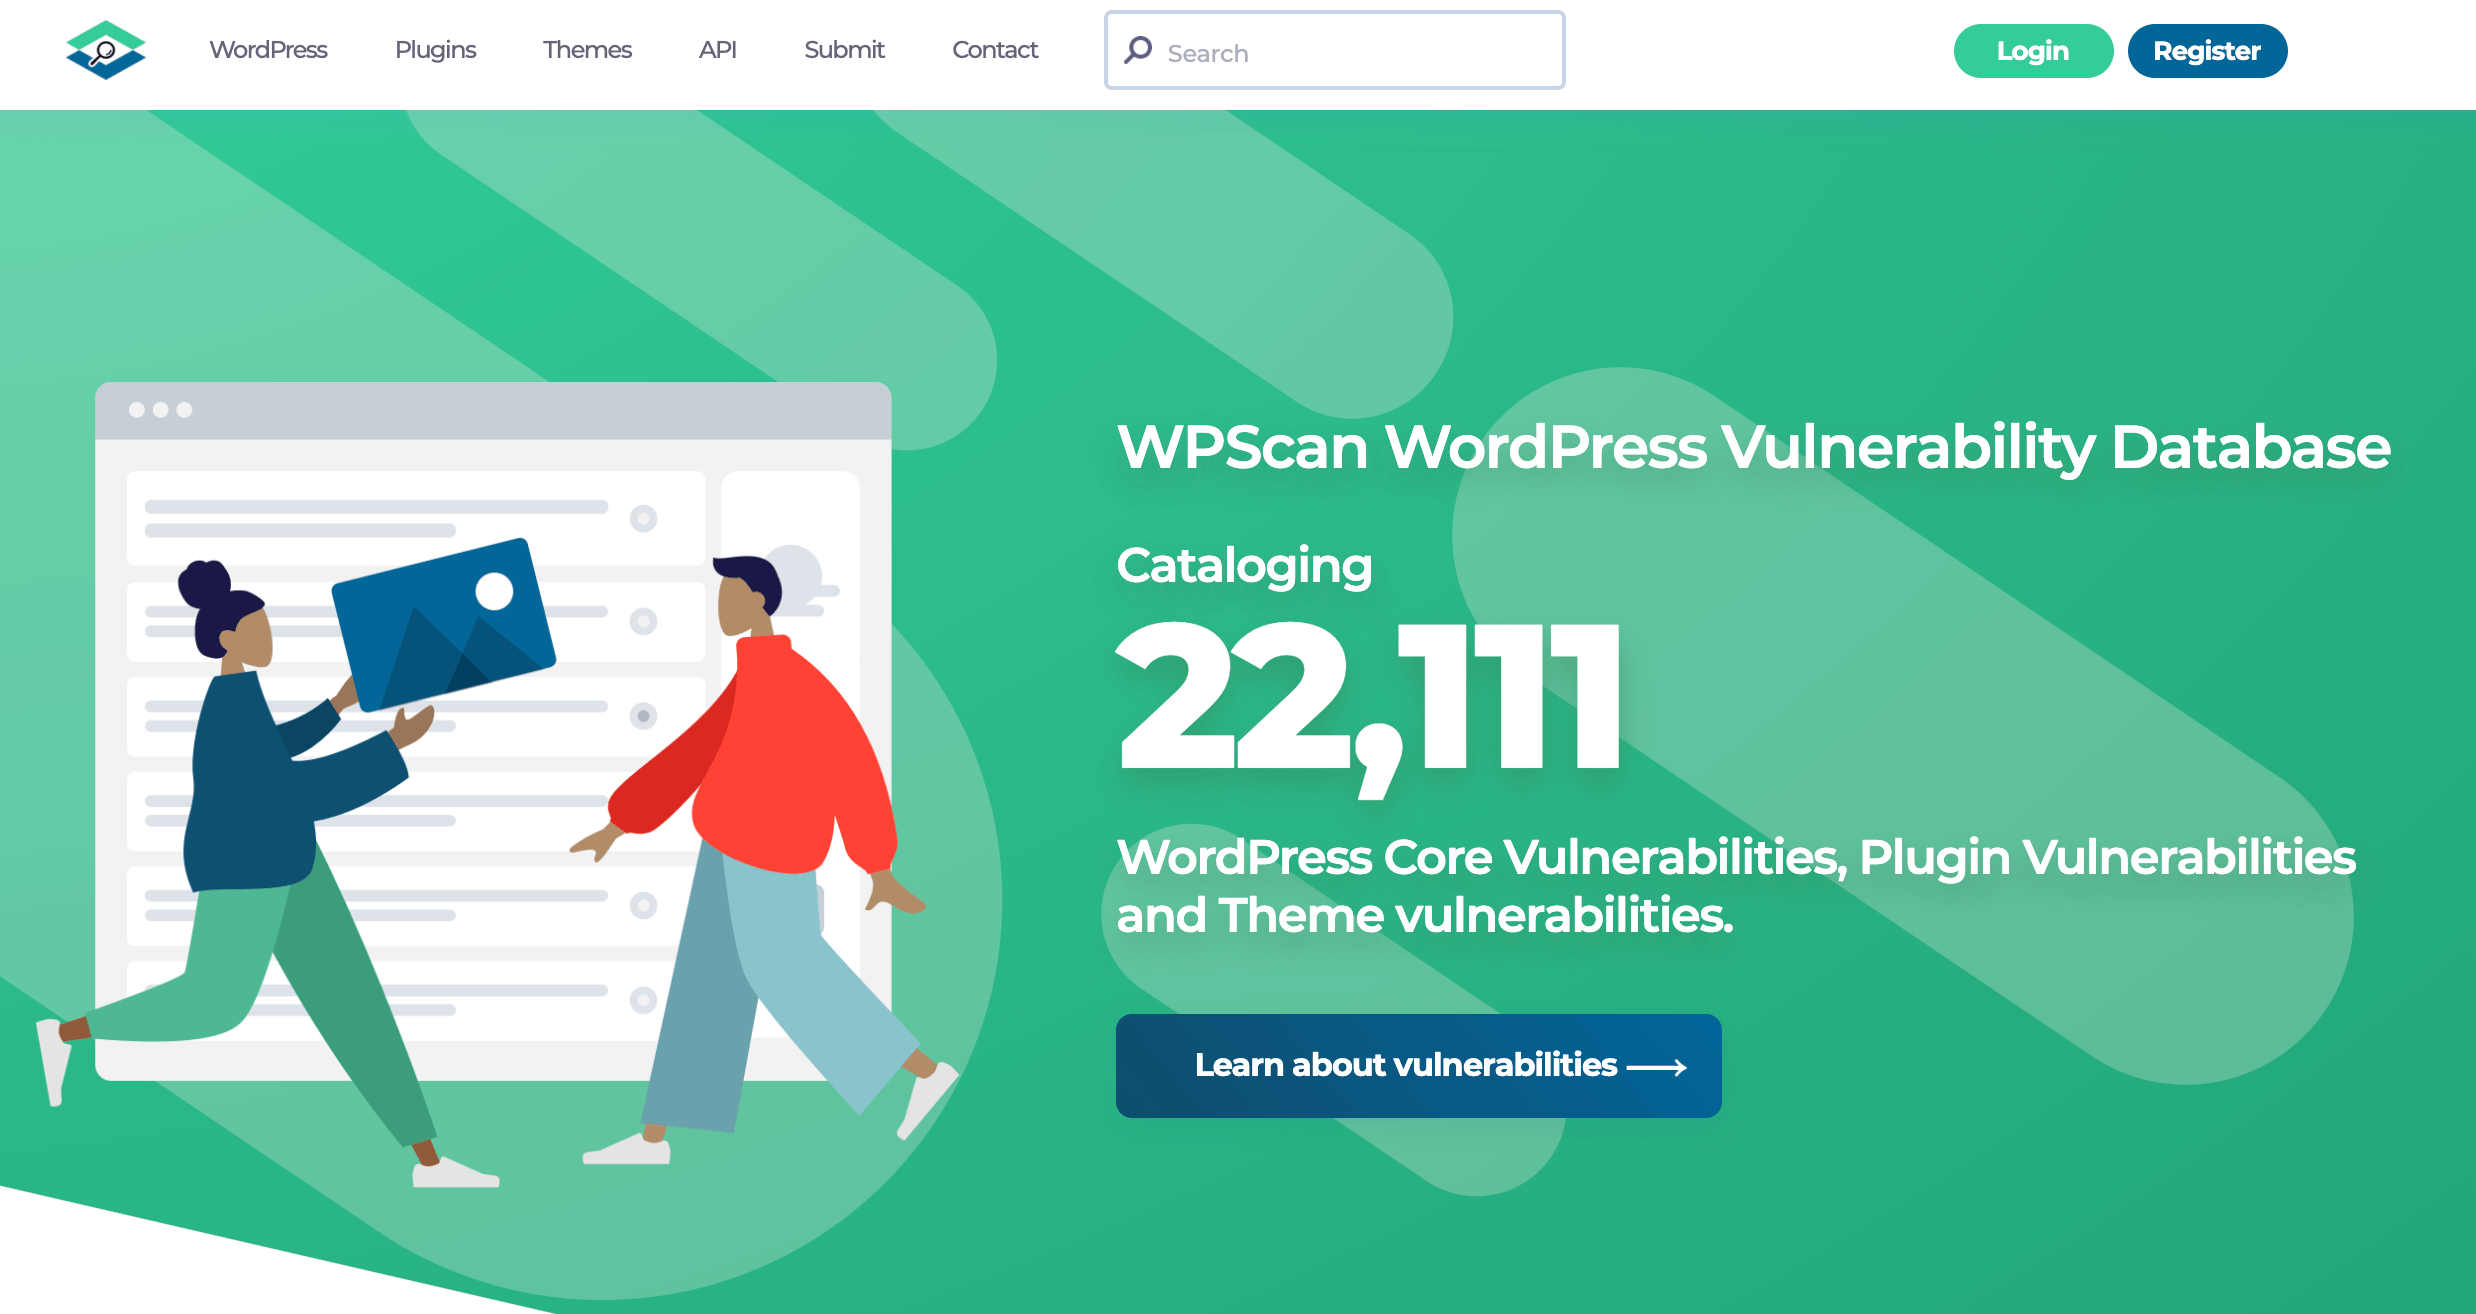 The WPScan vulnerability exploits database.